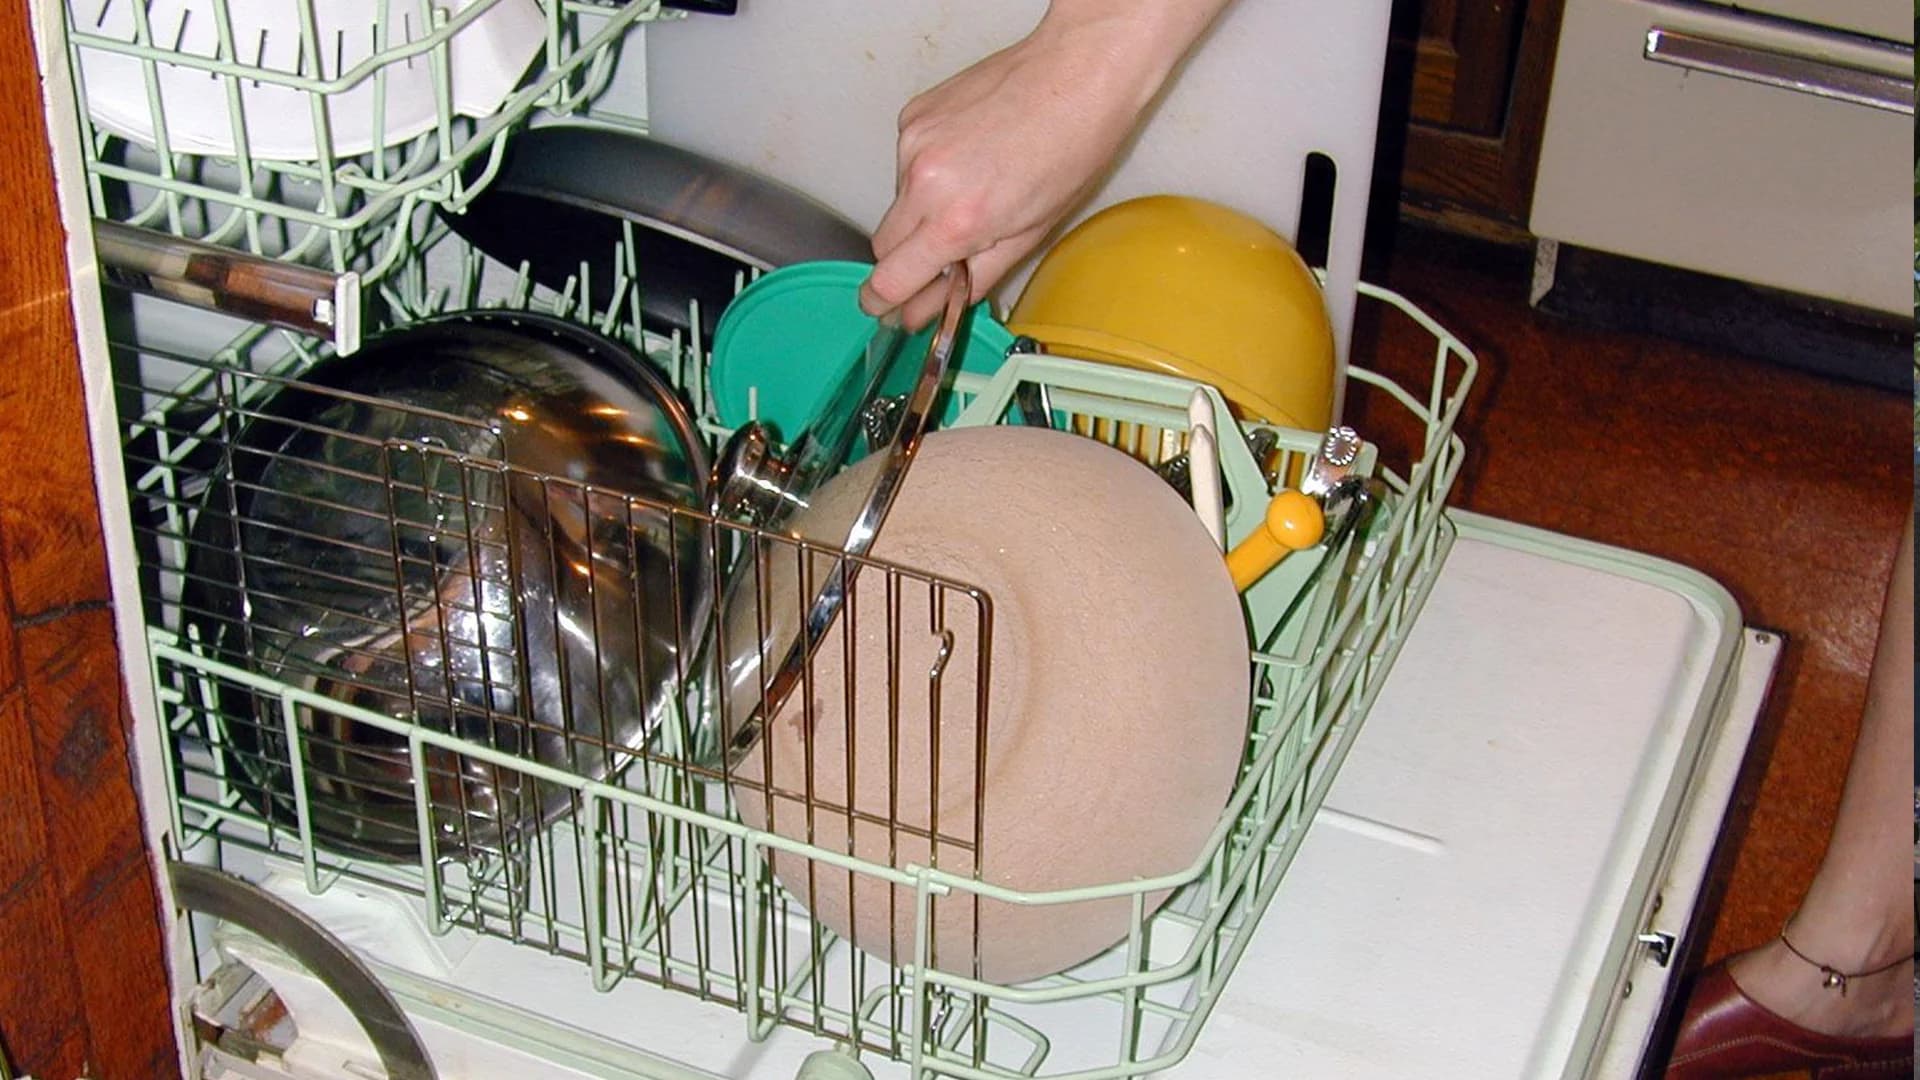 The Real Deal: Dishwasher hacks